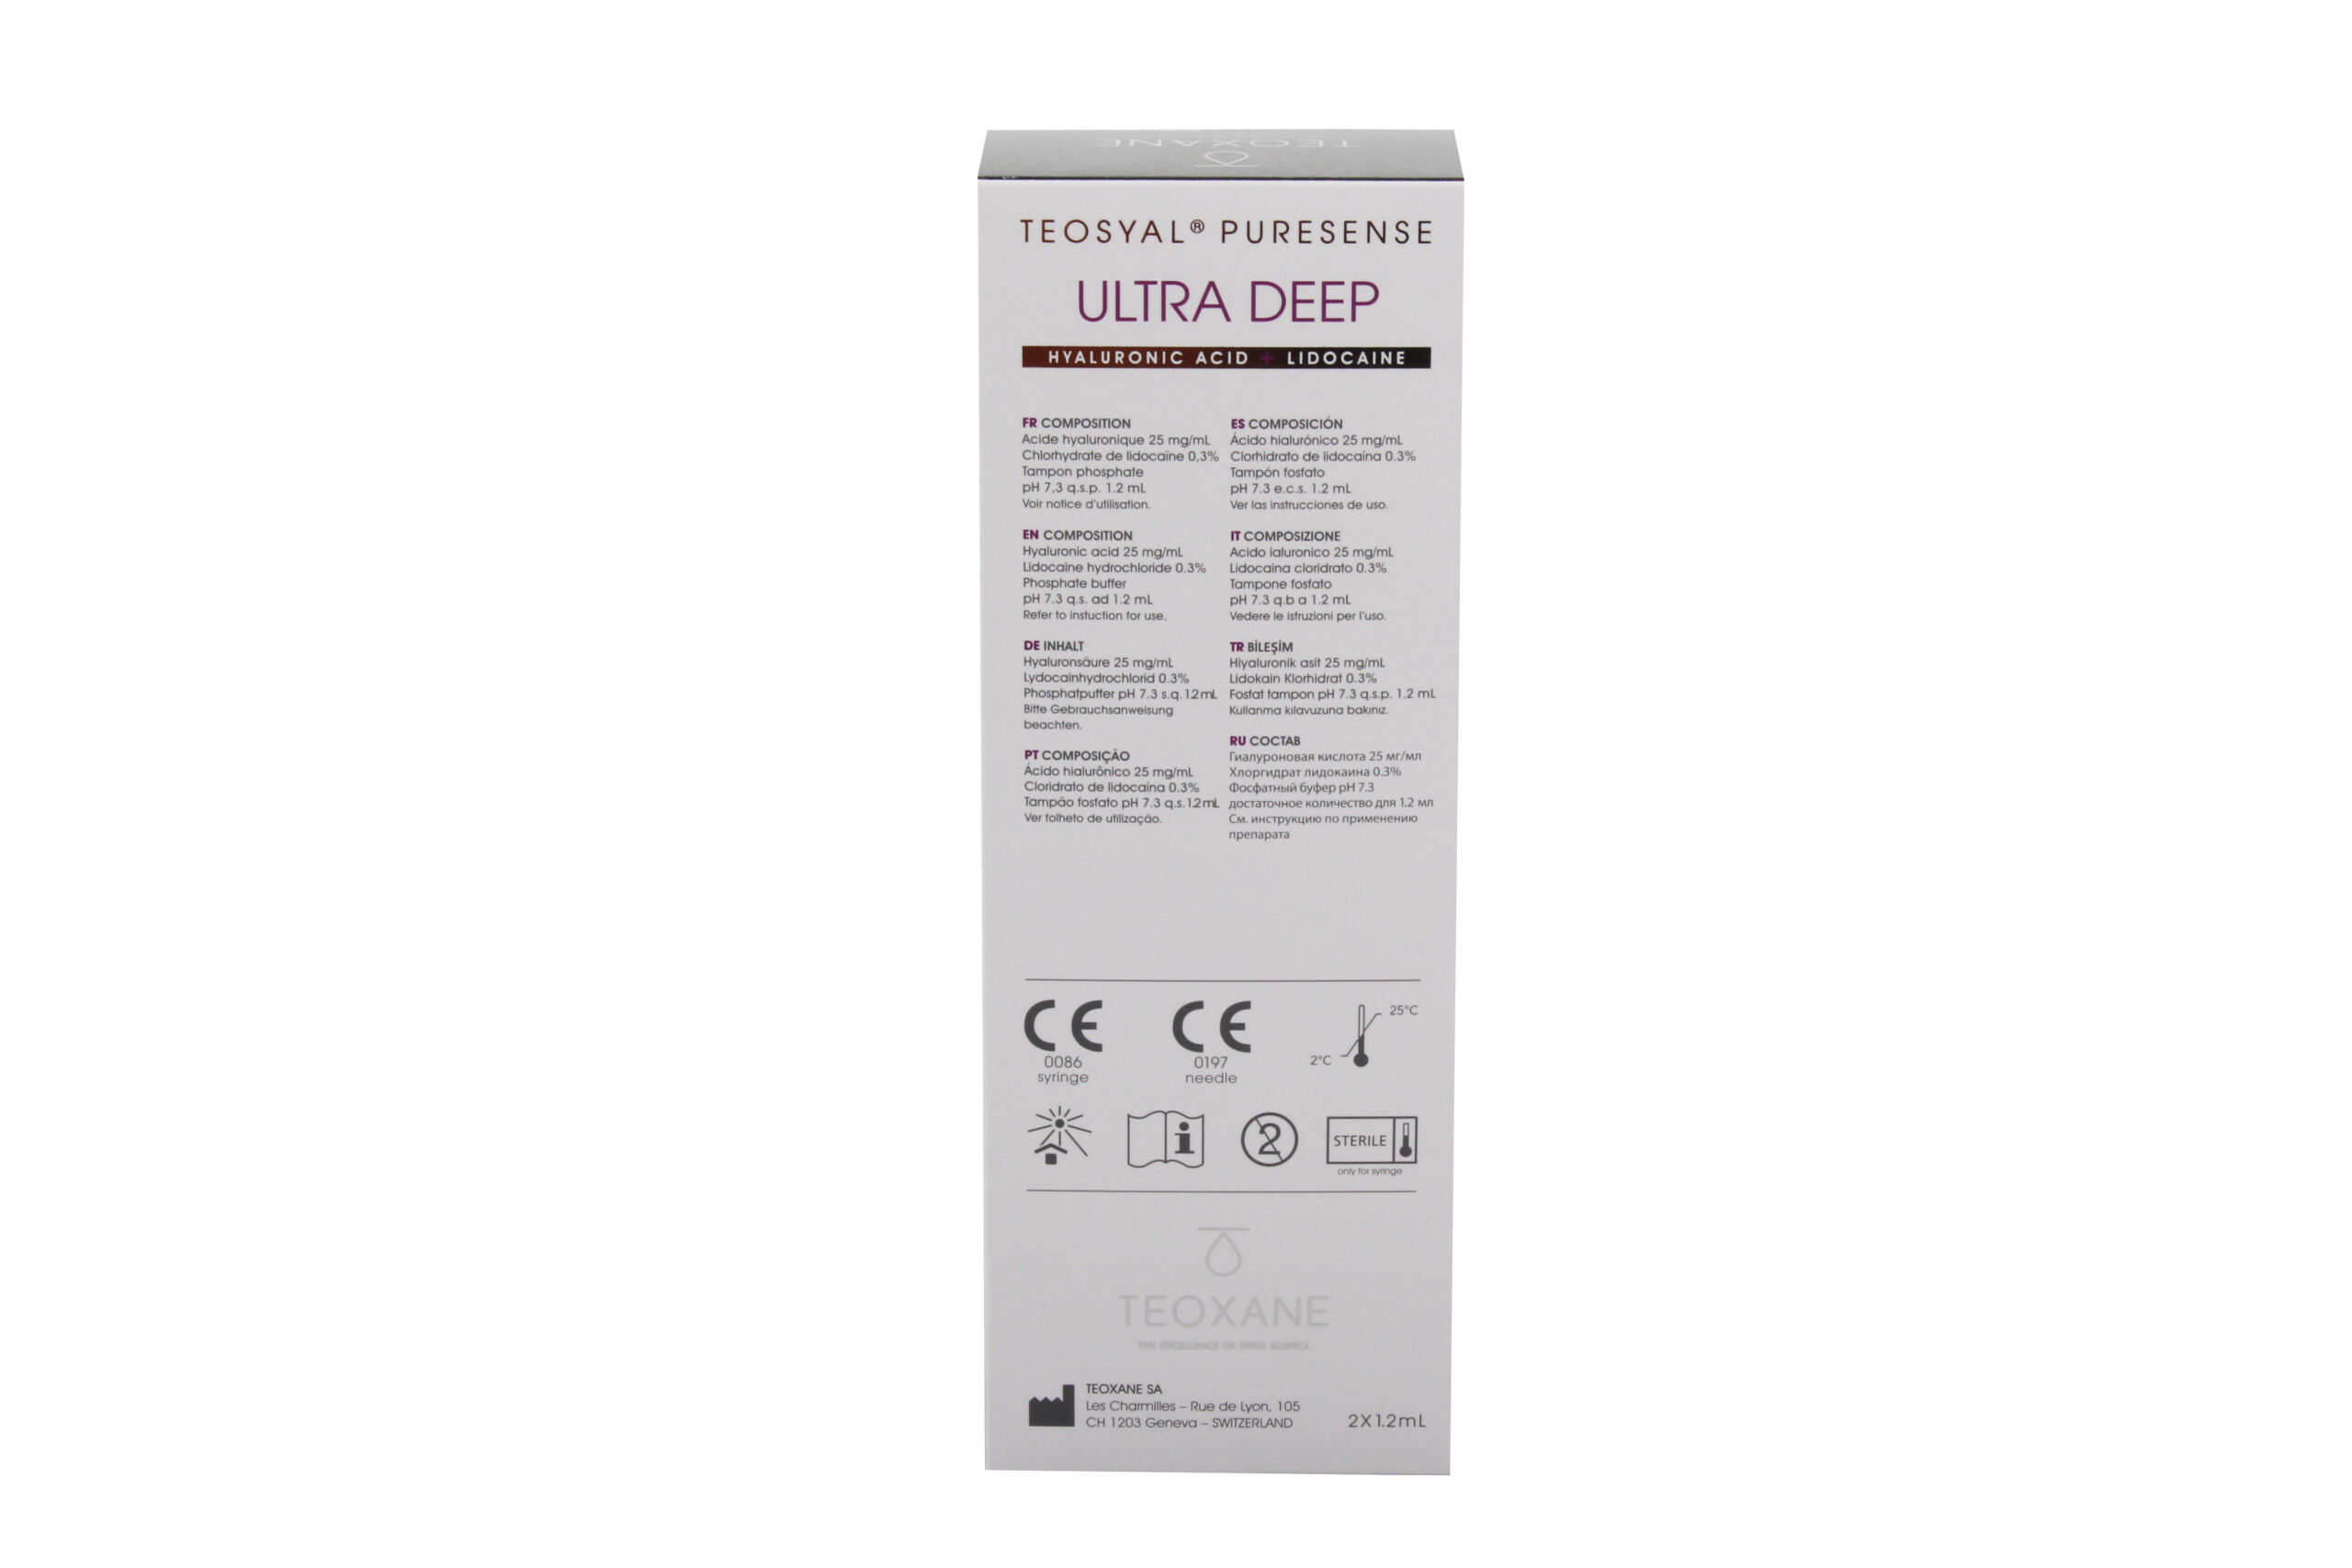 TEOSYAL Ultra Deep PureSense Lidocaine back